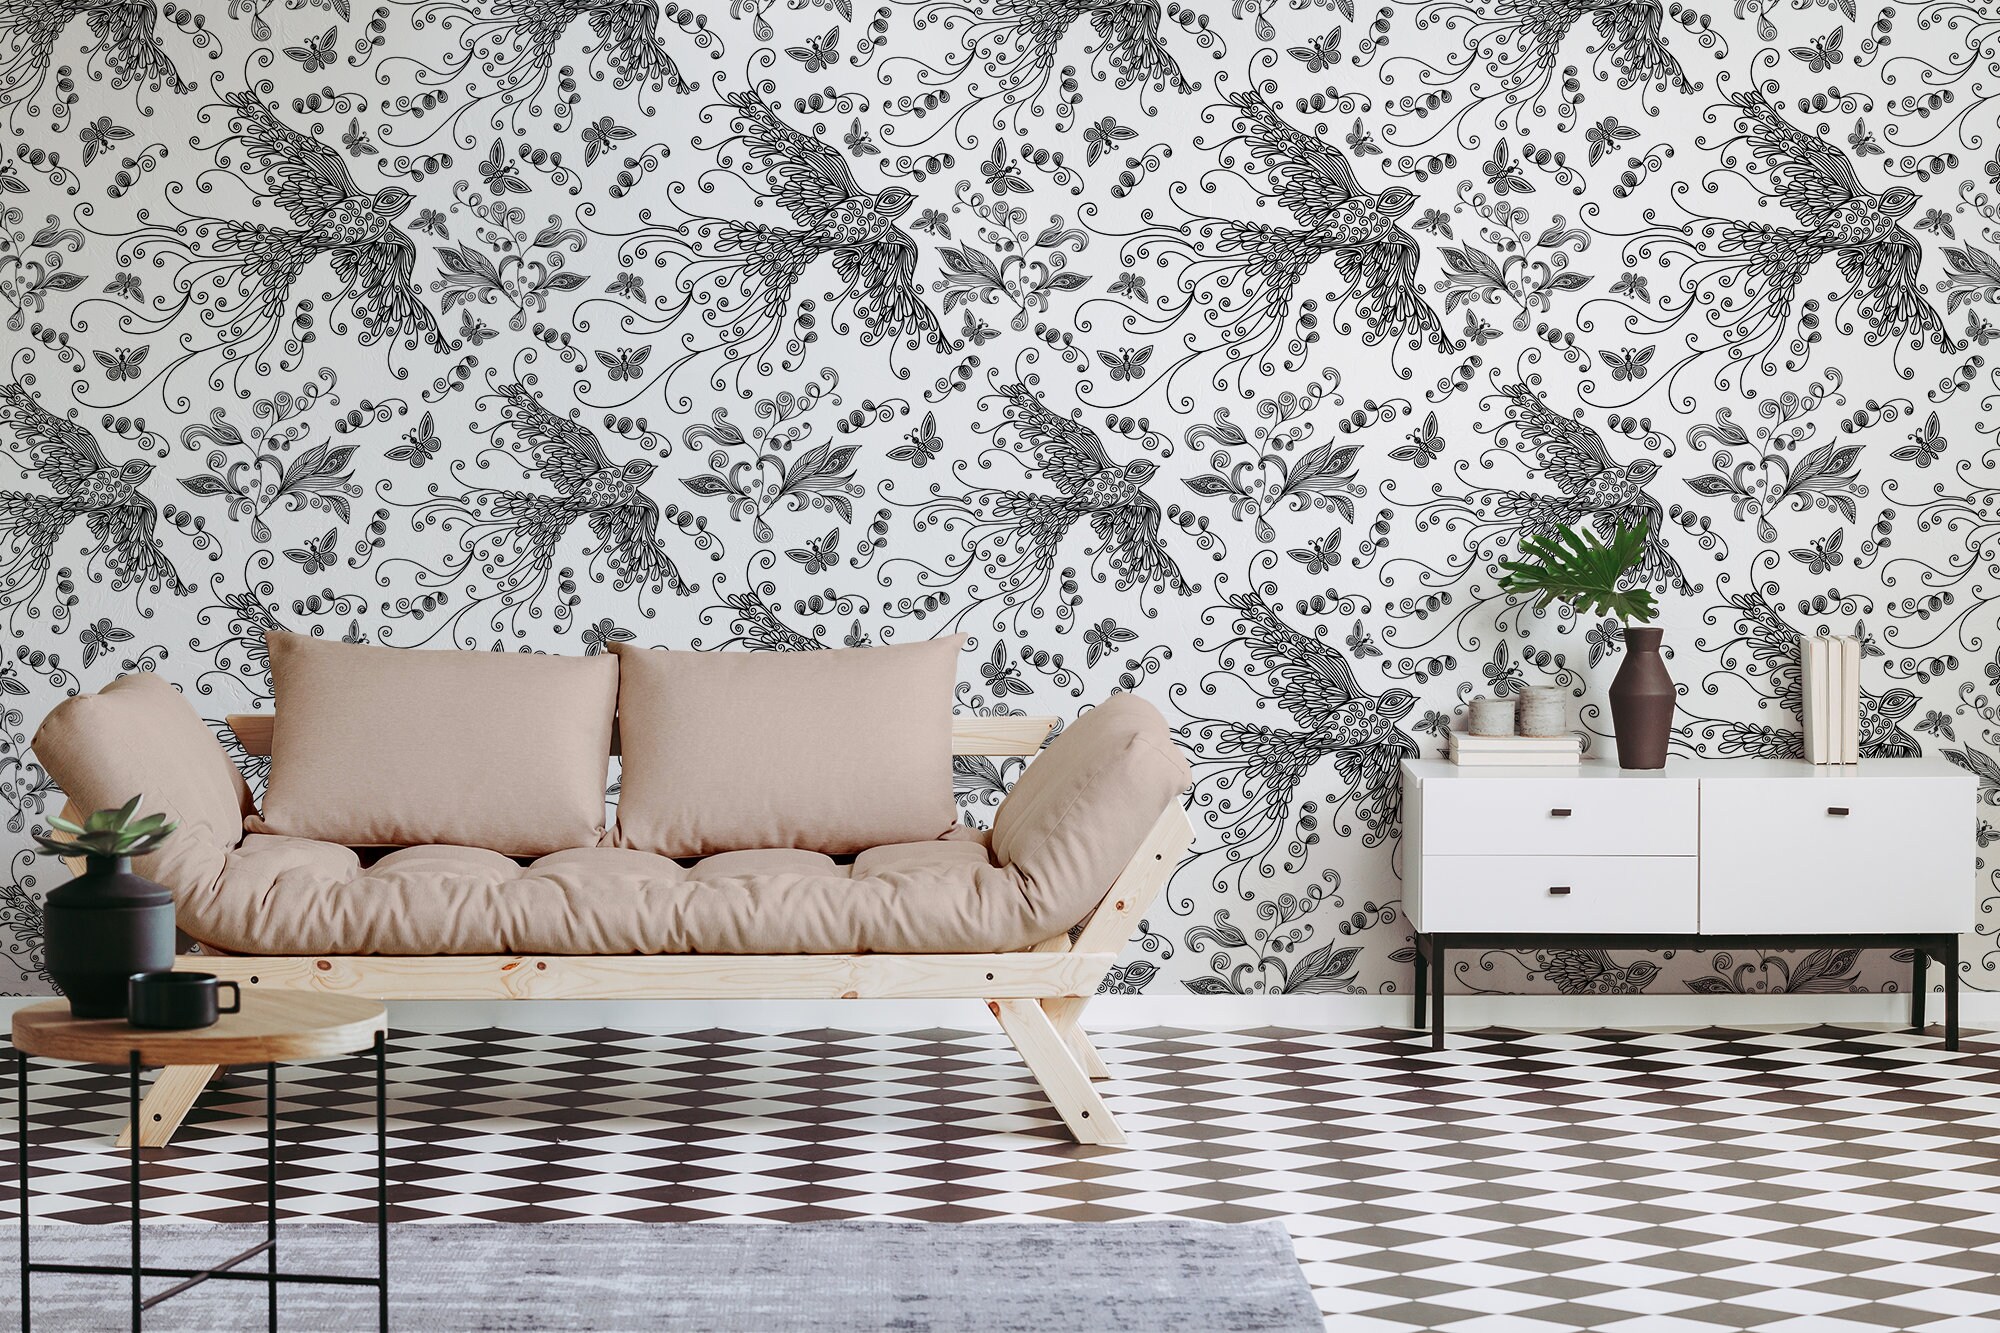 Elegant white and black wallpaper with bird pattern self | Etsy